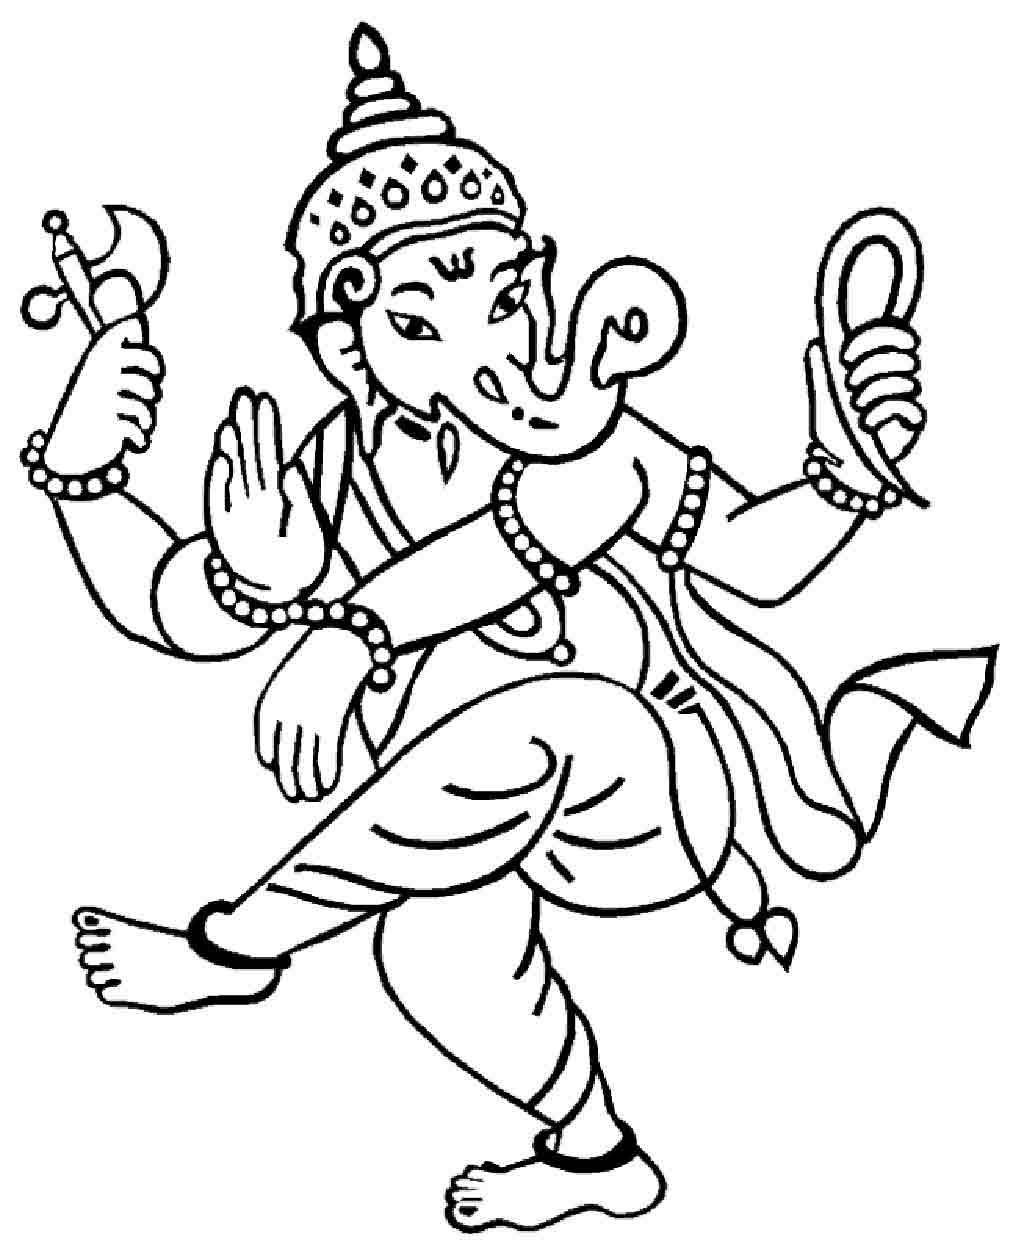 Lord Ganesha of India